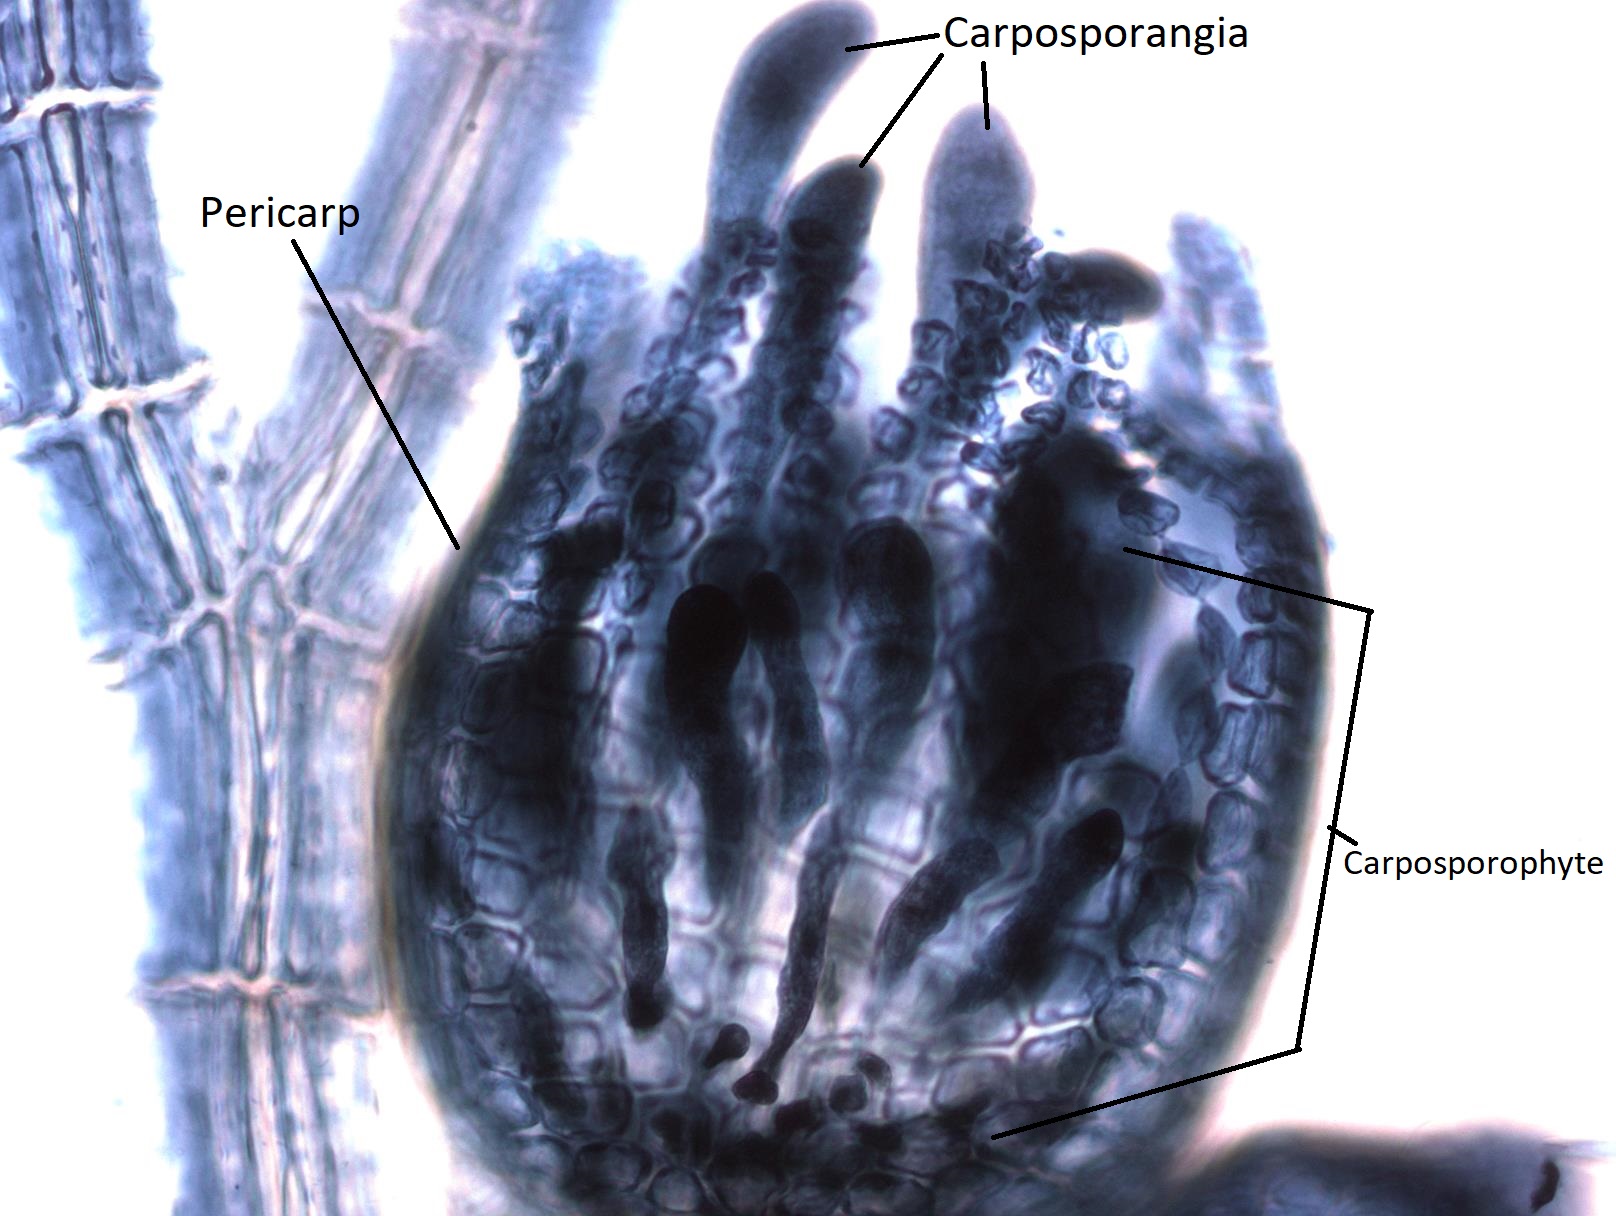 A labeled Polysiphonia cystocarp with emerging carposporangia